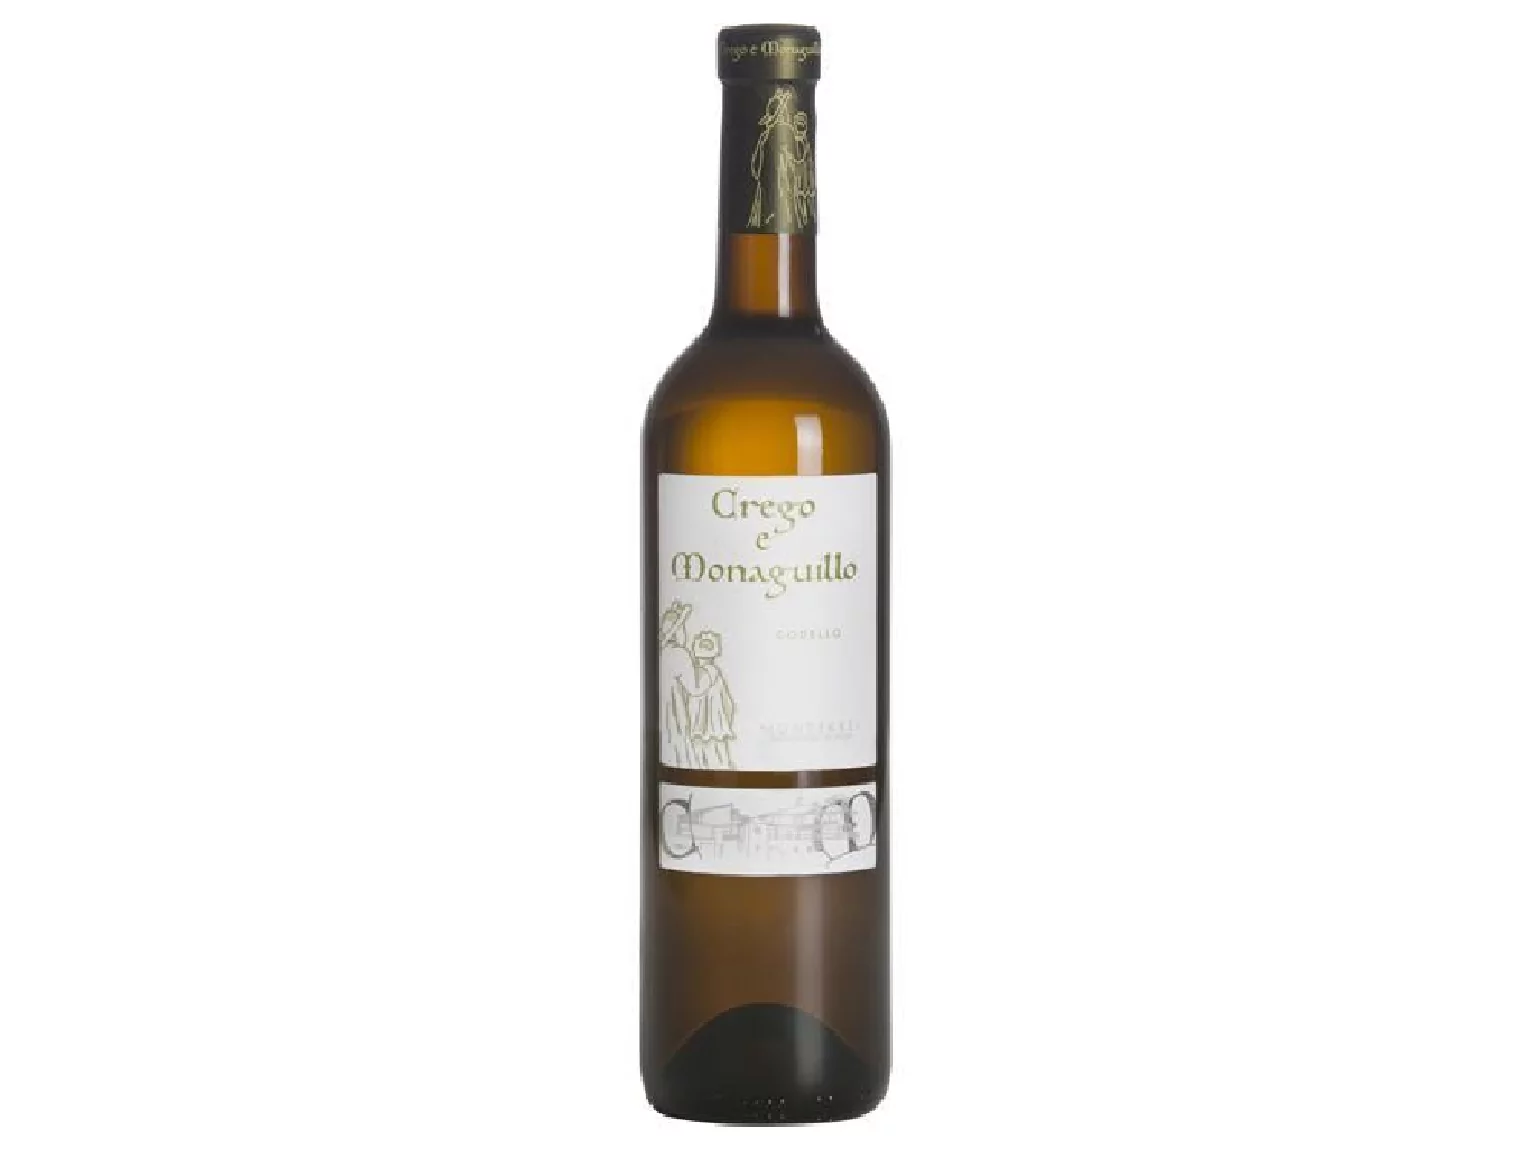 Comprar vino gallego blanco online crego e monaguillo